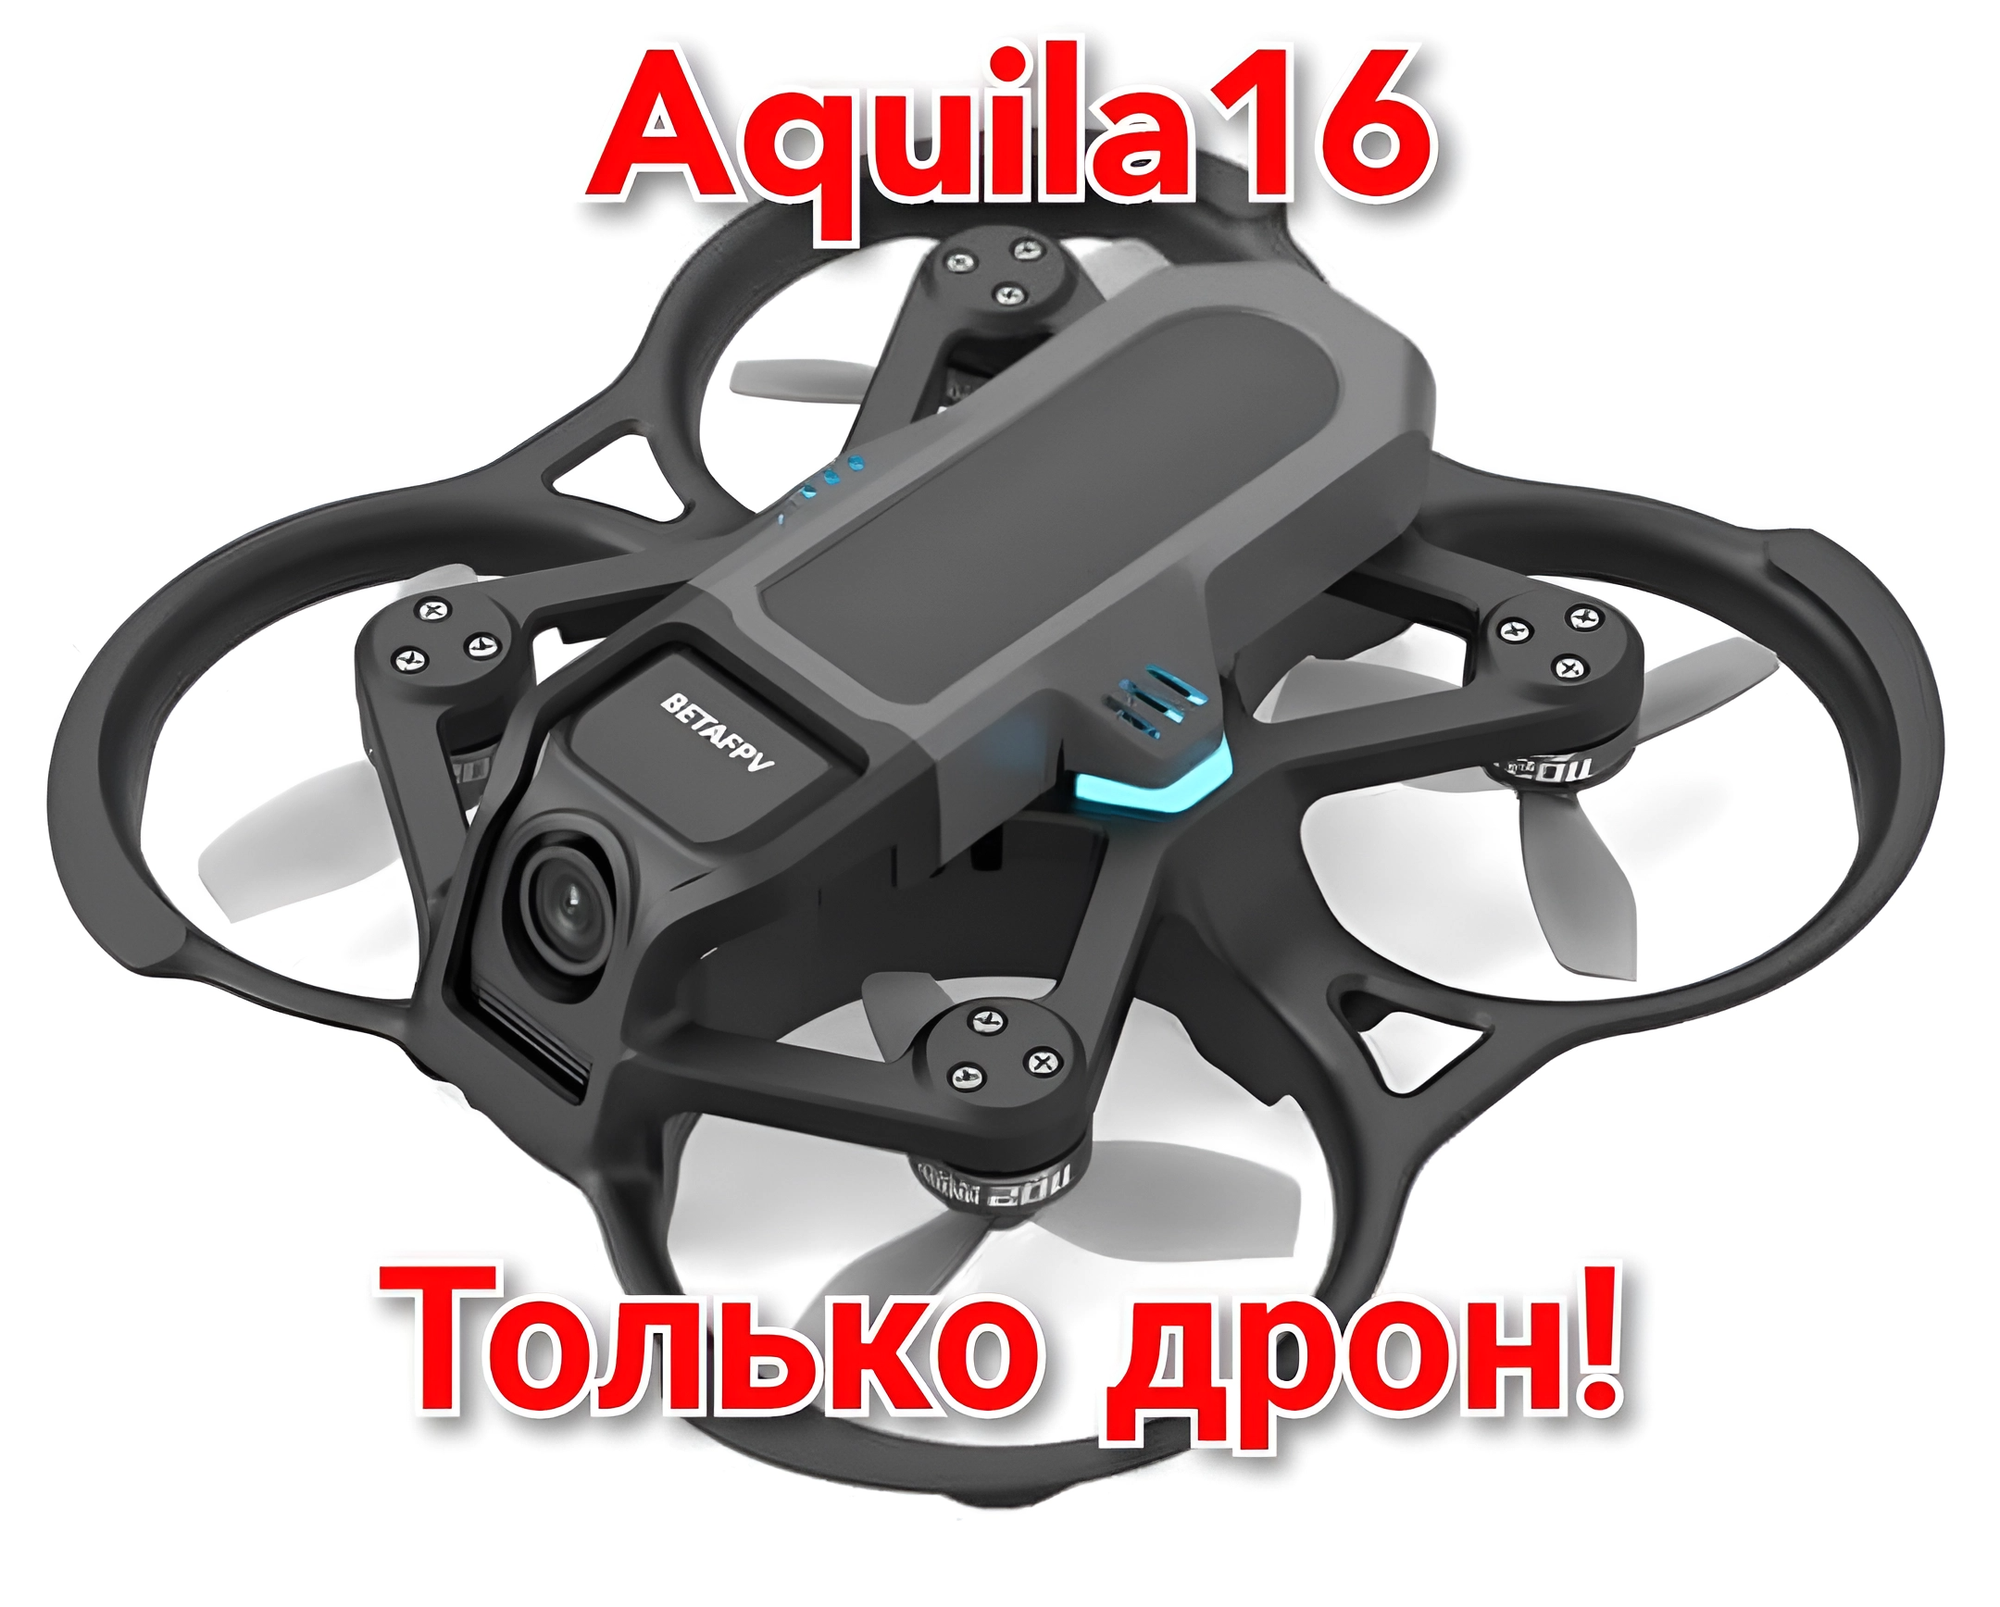 Aquila-16 дрон отдельно(не в наборе!)